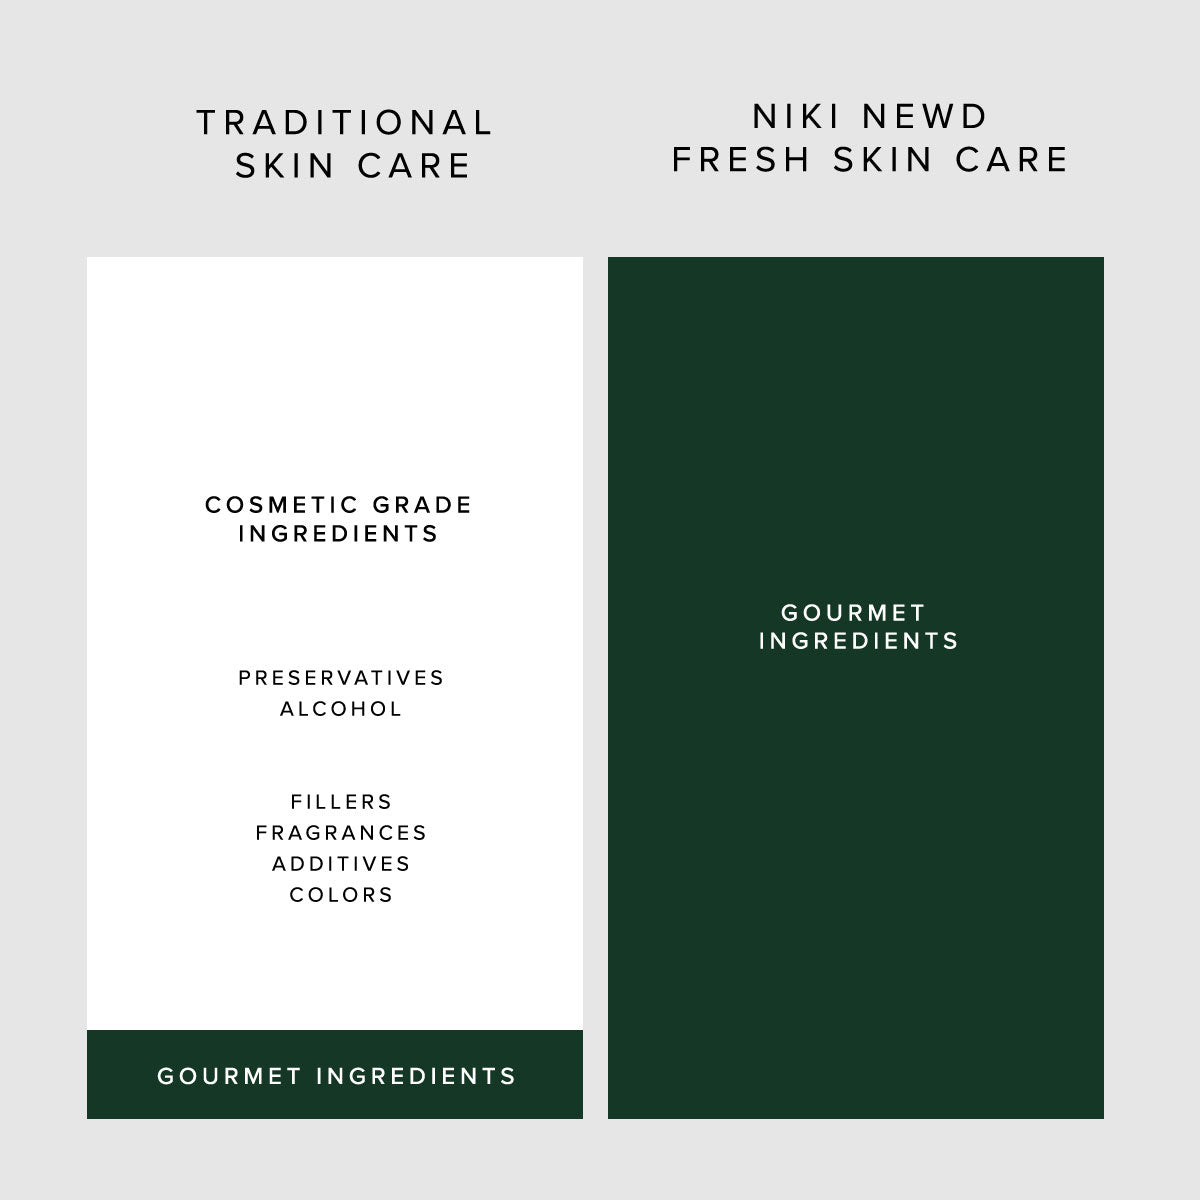 Niki Newd Skin Care only Gourmet ingredients